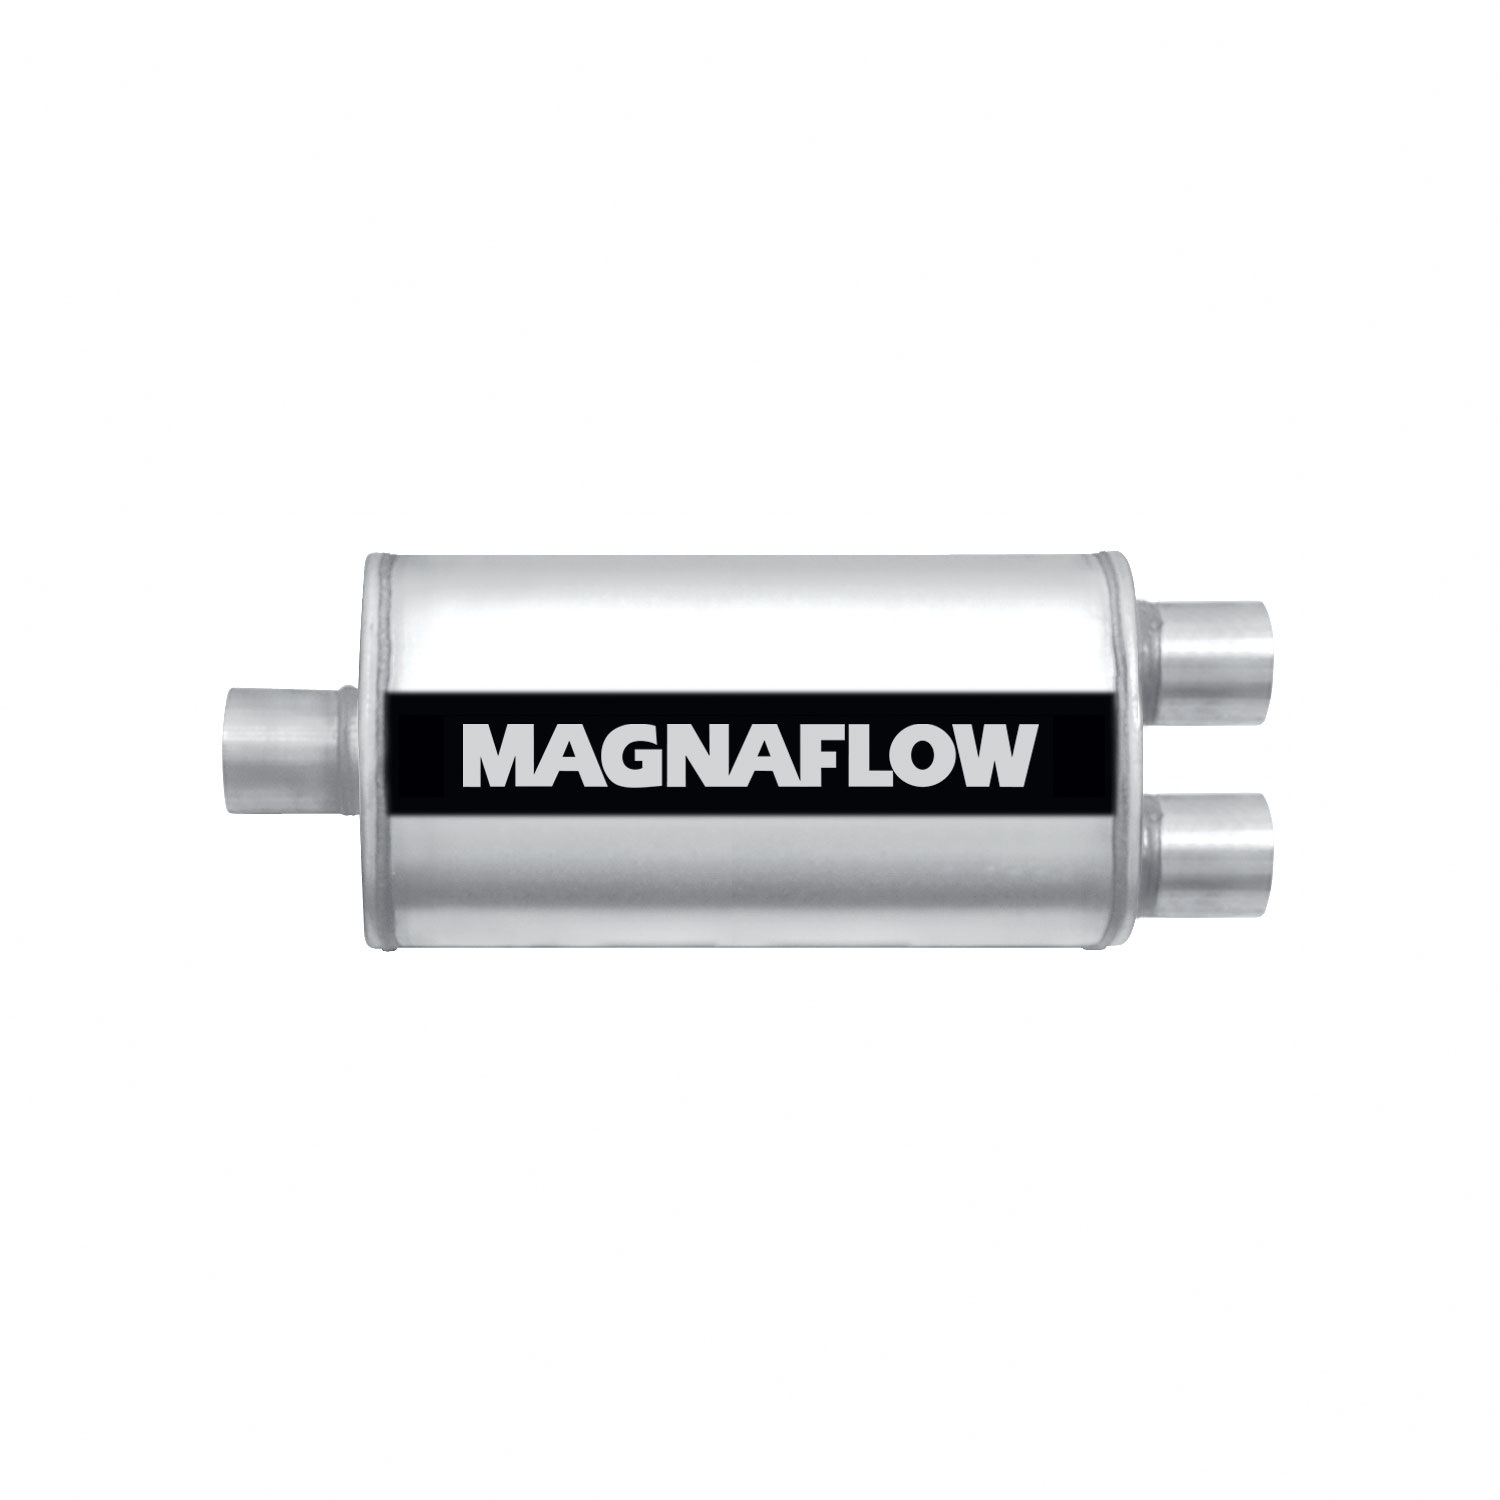 Magnaflow Performance Exhaust Magnaflow Performance Exhaust 12198 Stainless Steel Muffler